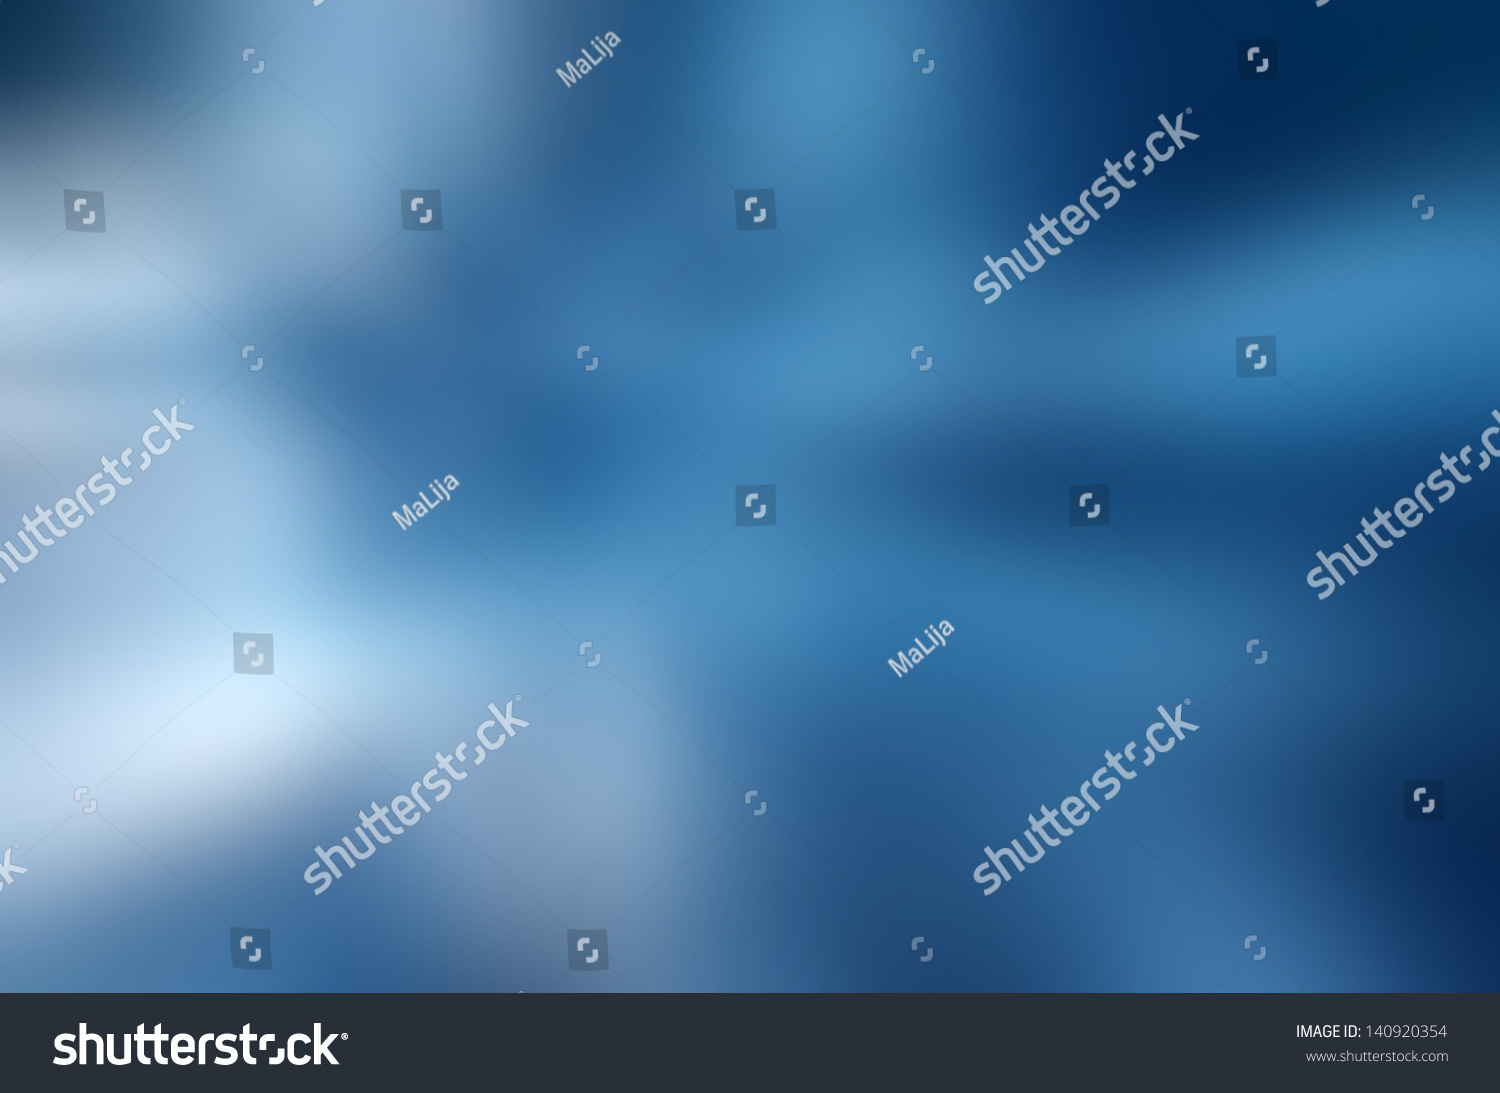 Blurry Blue Background Stock Illustration 140920354 - Shutterstock